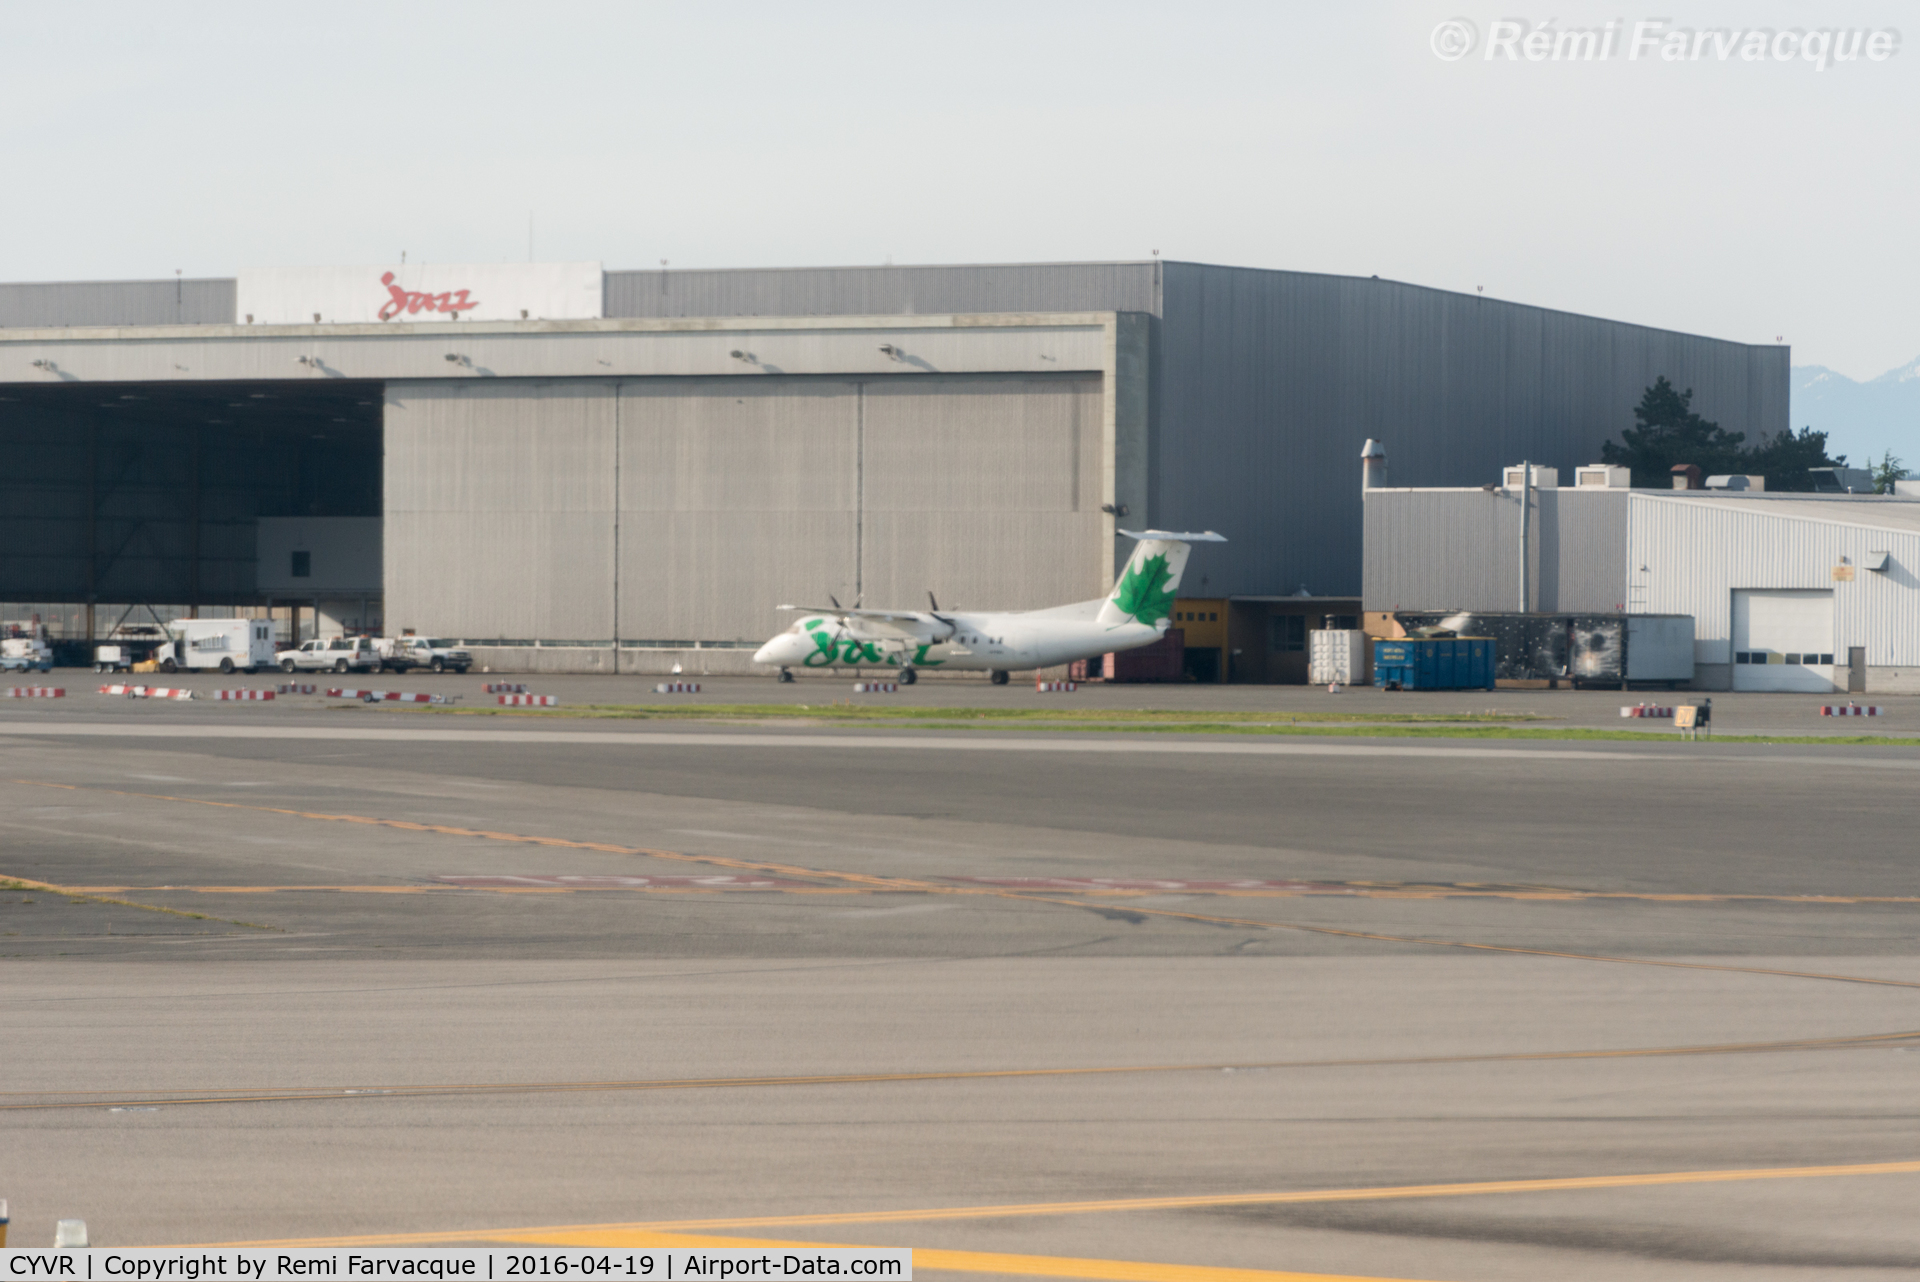 Vancouver International Airport, Vancouver, British Columbia Canada (CYVR) - Jazz (Air Canada) hangar facing south runway.